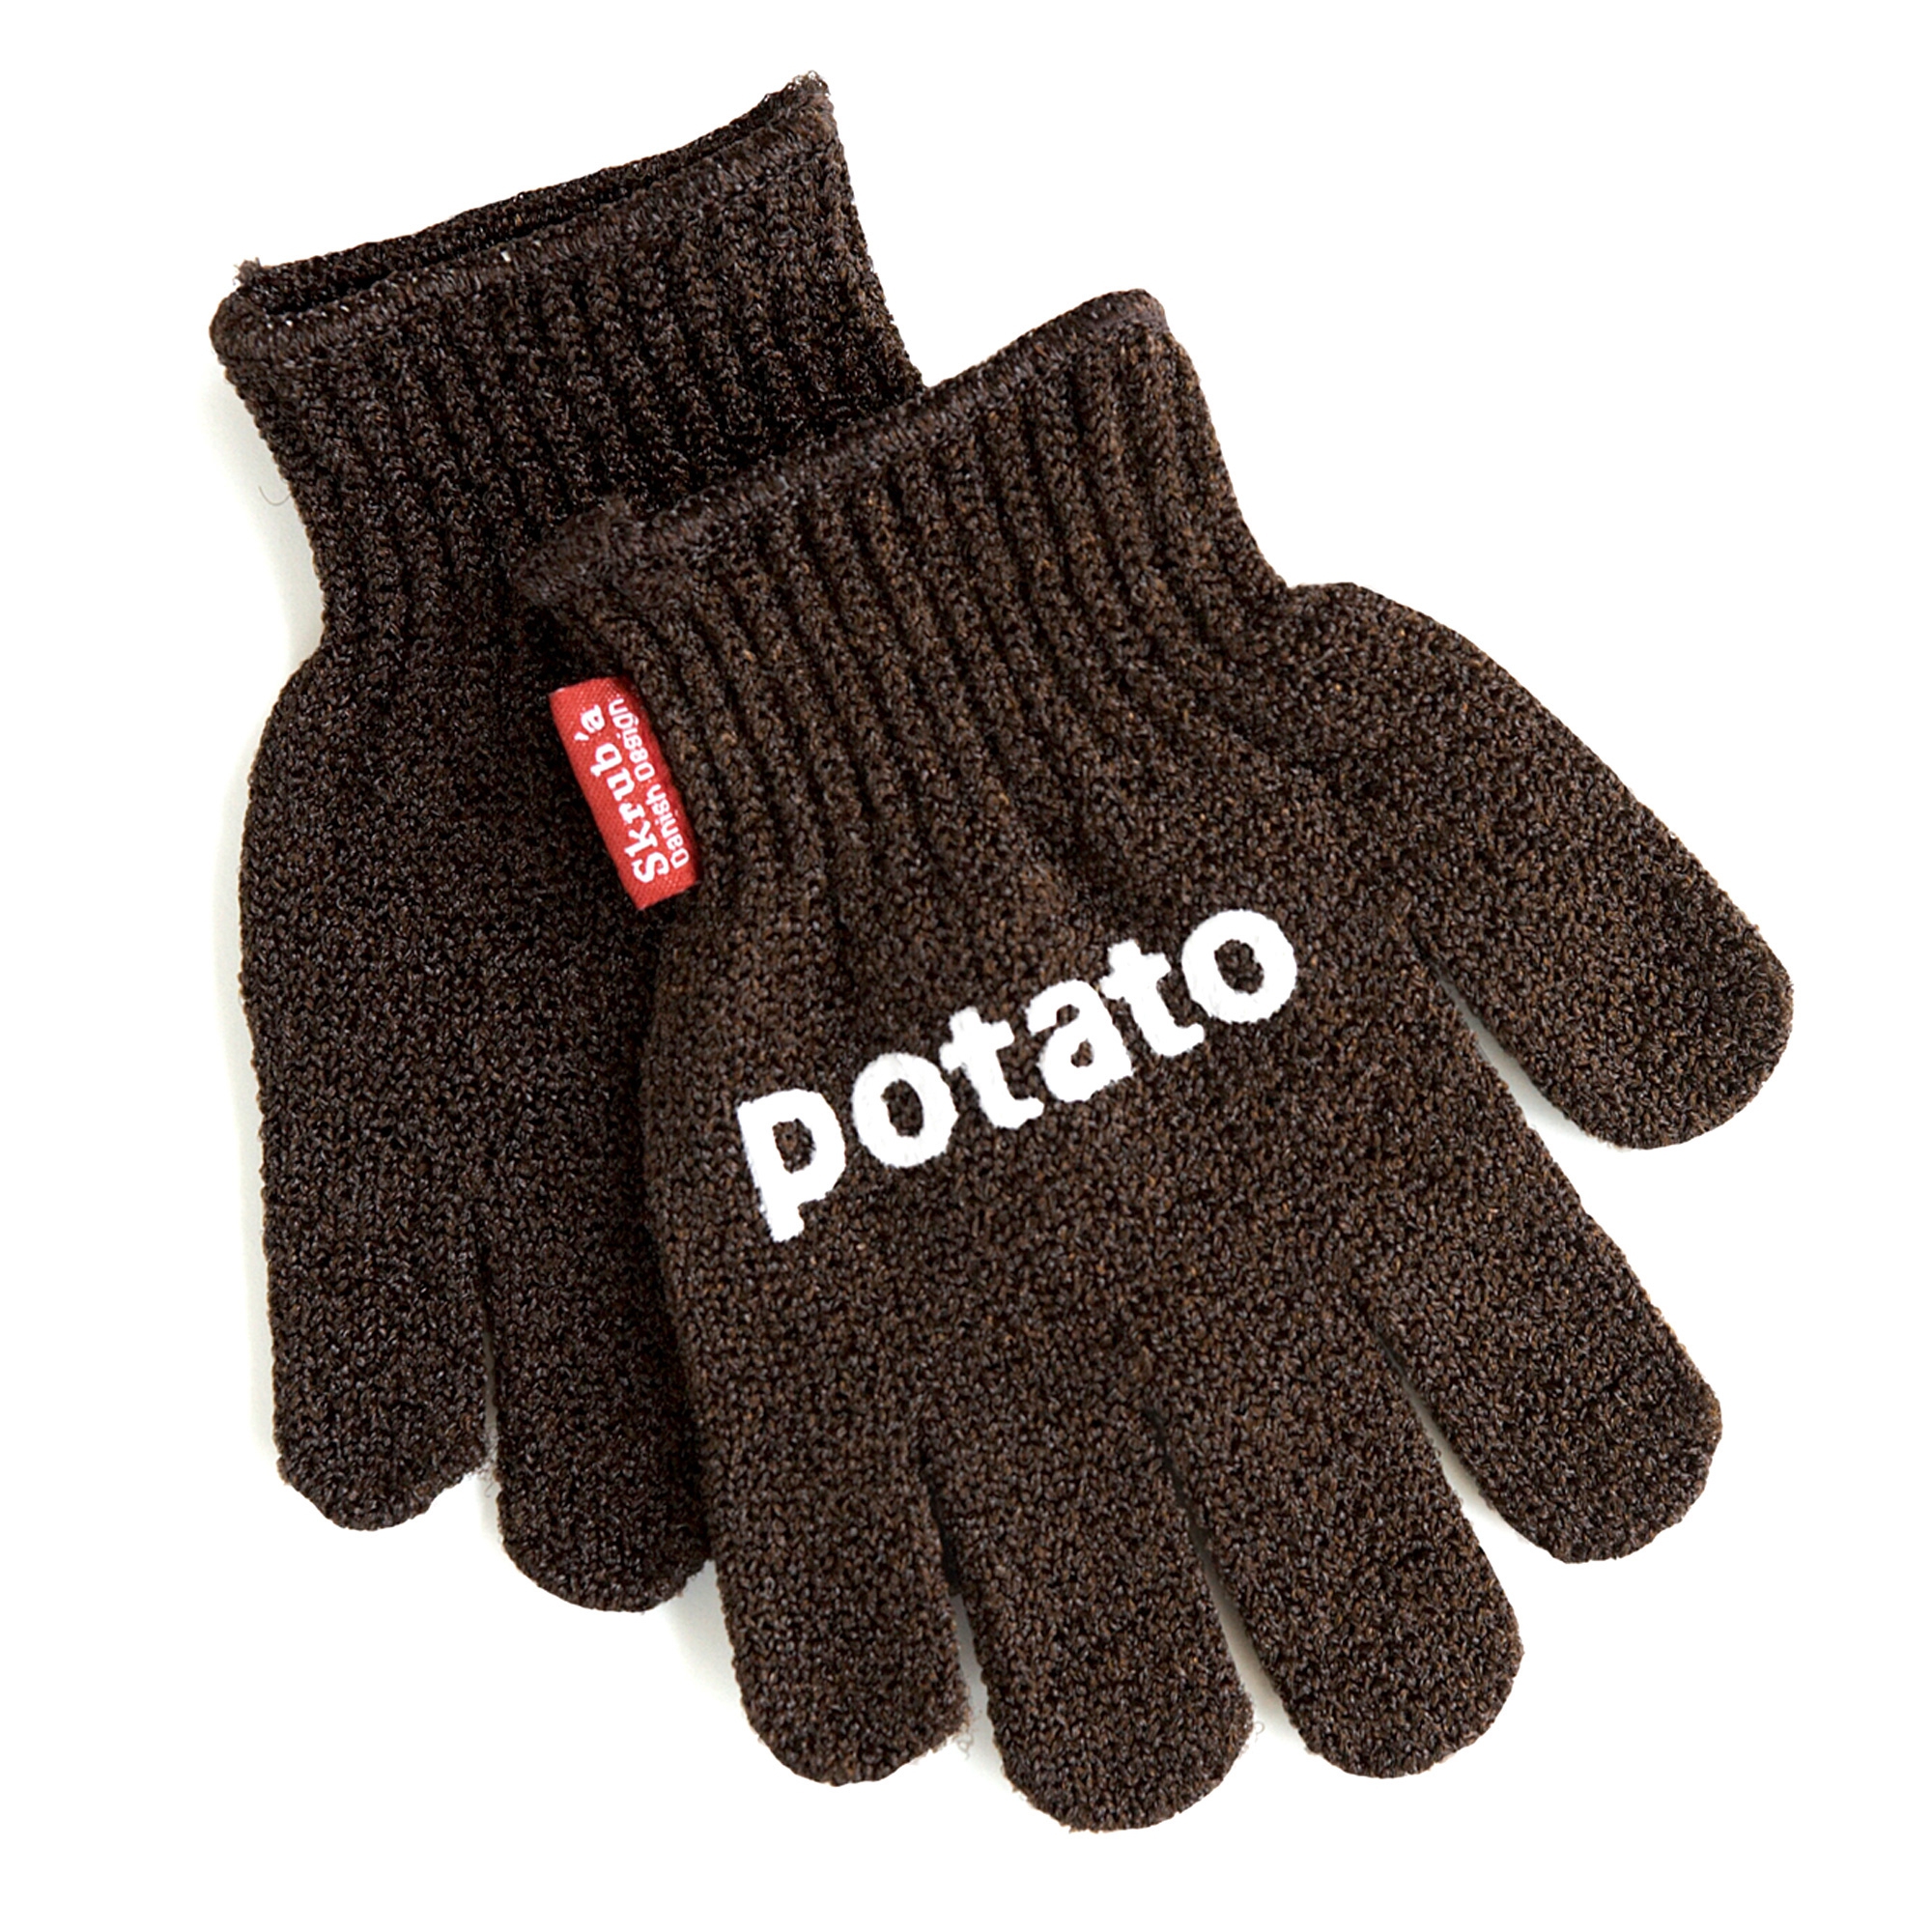 Fabrikators - SKRUB'A Handschuh für Kinder